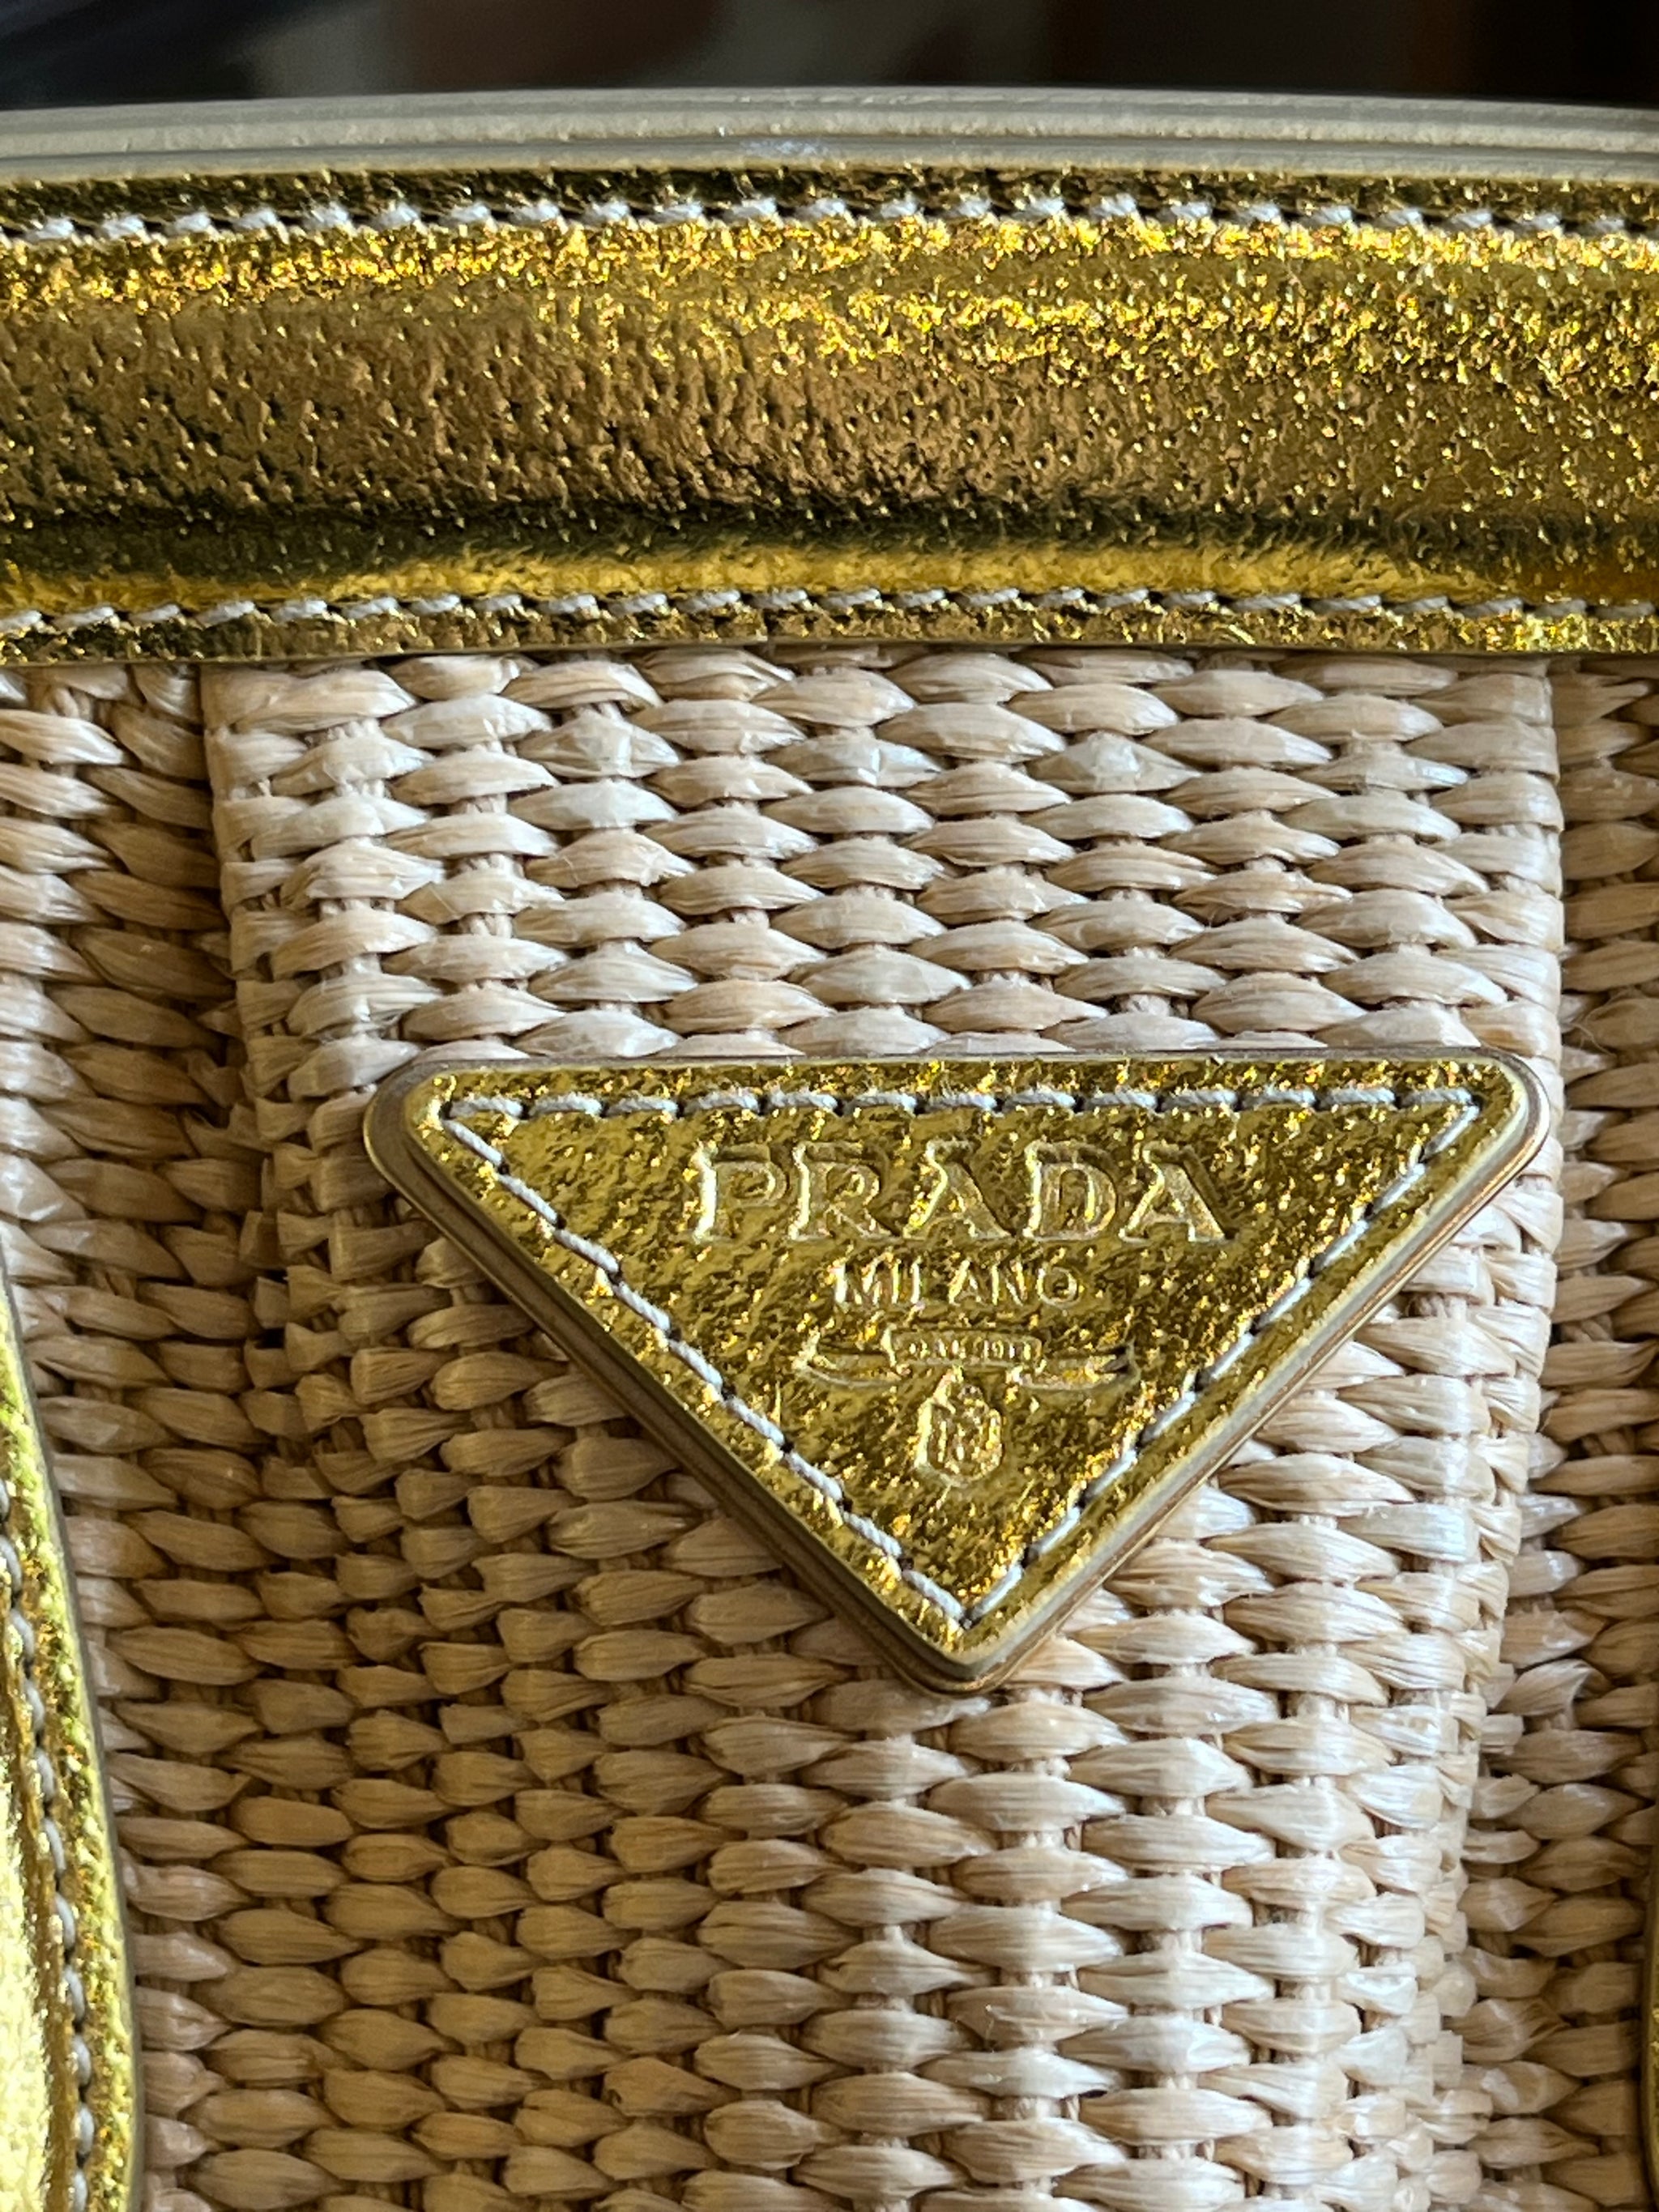 PRADA Raffia Woven & Metallic Gold Leather Madras Frame Top Chain